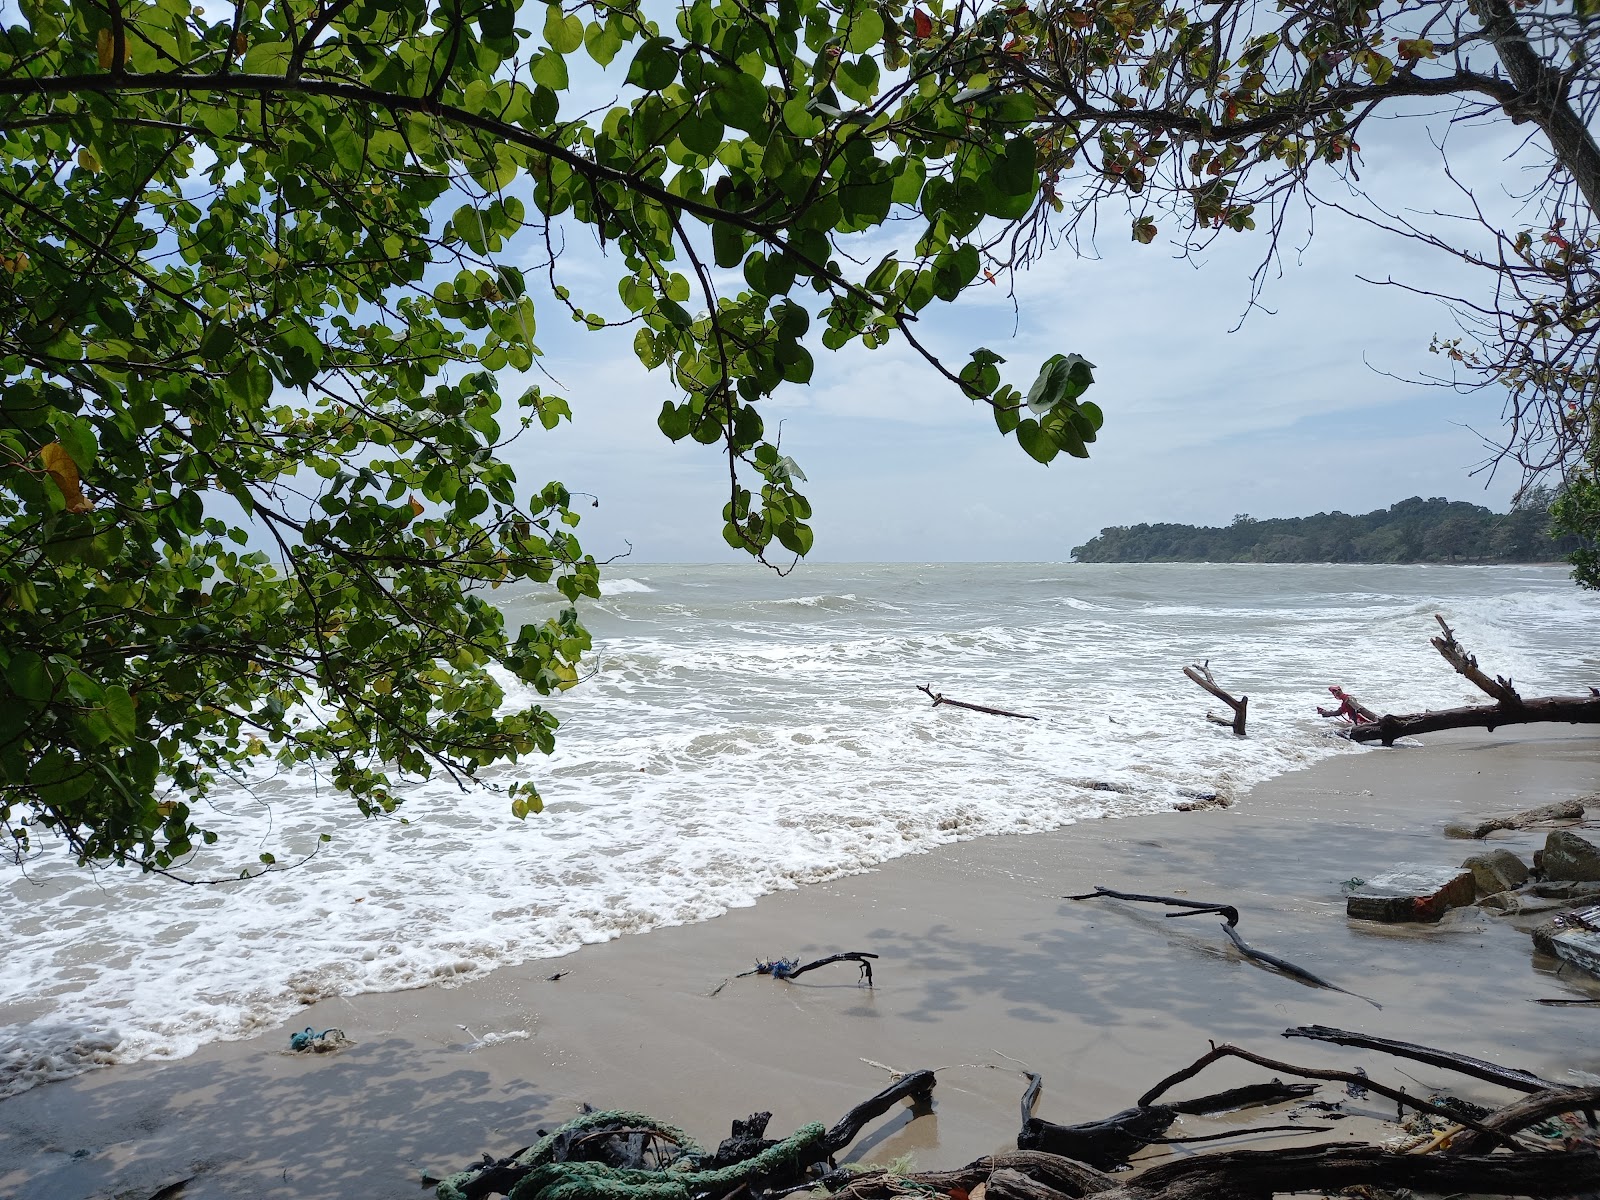 Foto de Batu Layar Beach - lugar popular entre os apreciadores de relaxamento